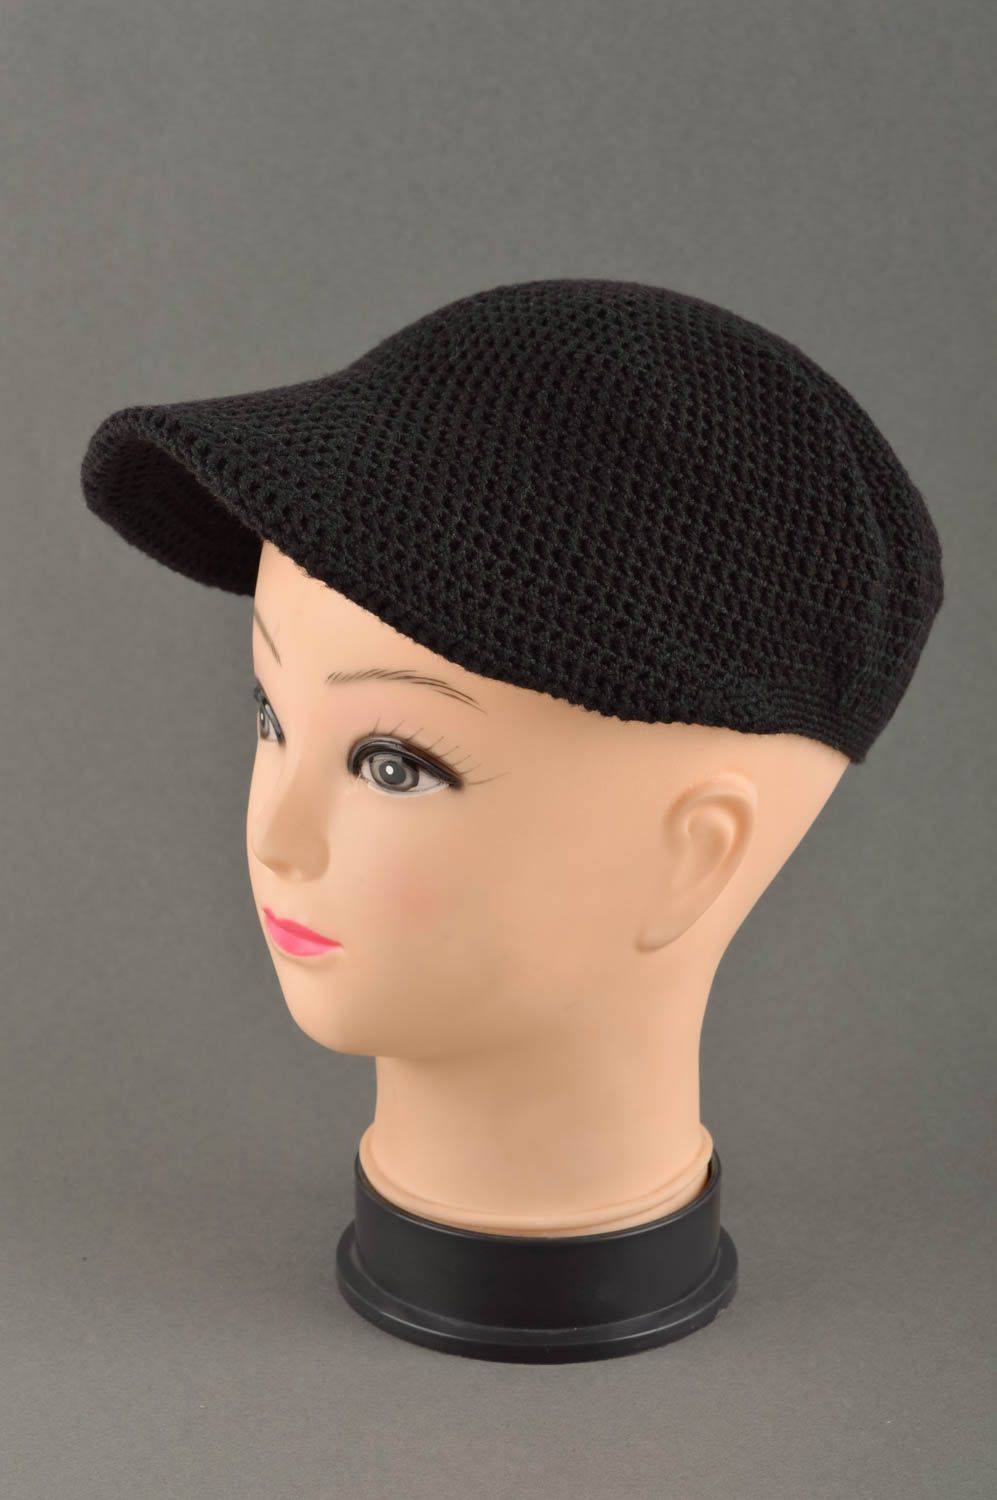 Handmade hat designer cap unusual gift ideas women hat summer hat for girls photo 1